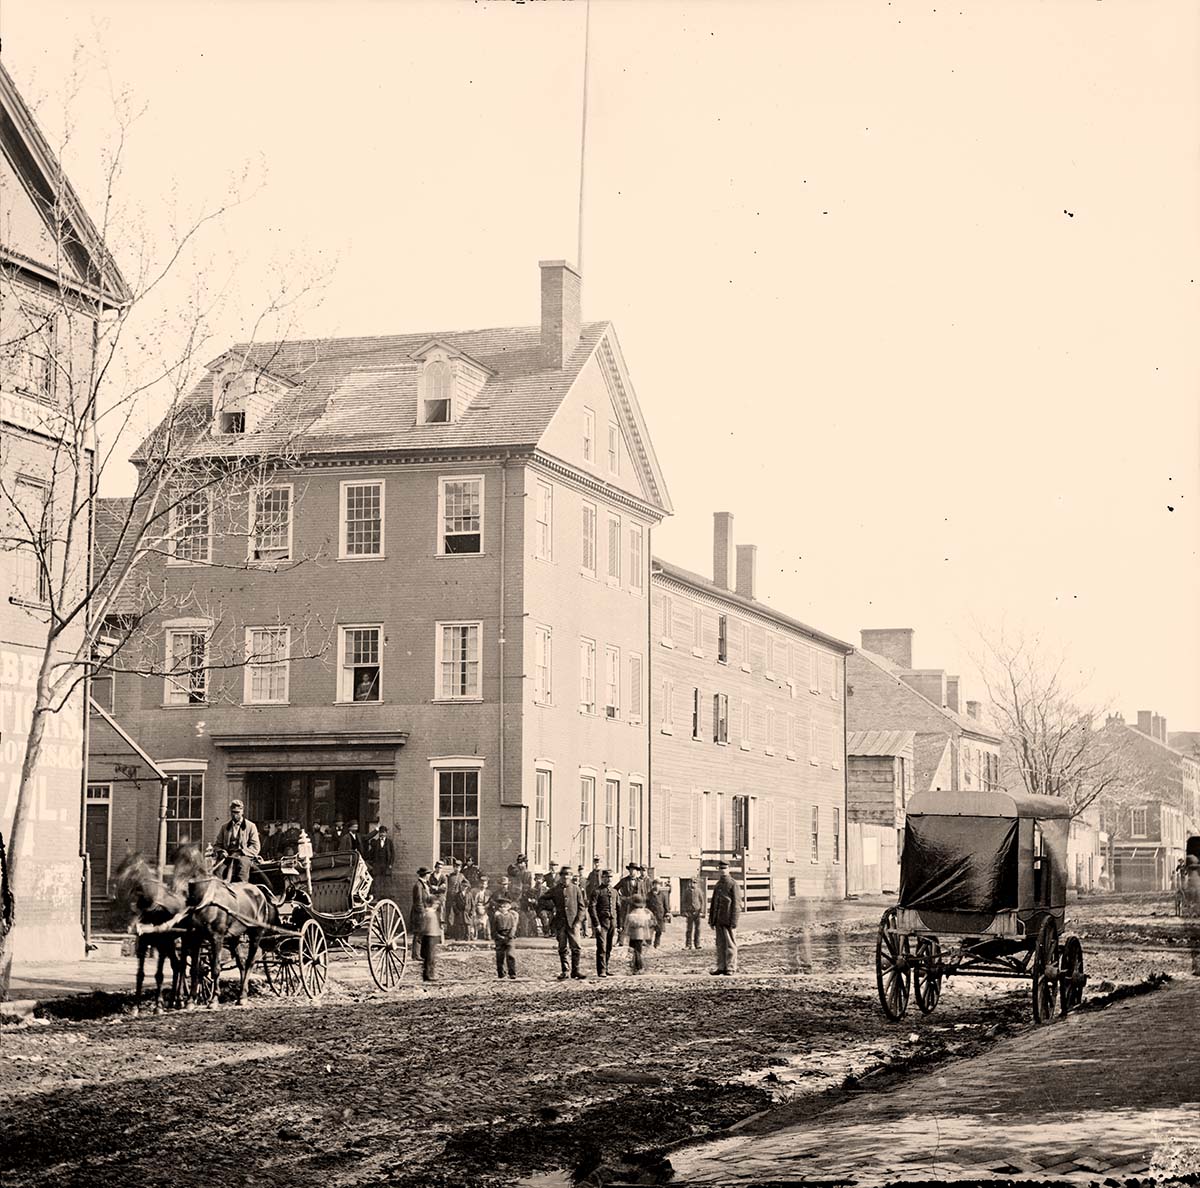 Alexandria, Virginia. Marshall House, King and Pitt Streets, circa 1865